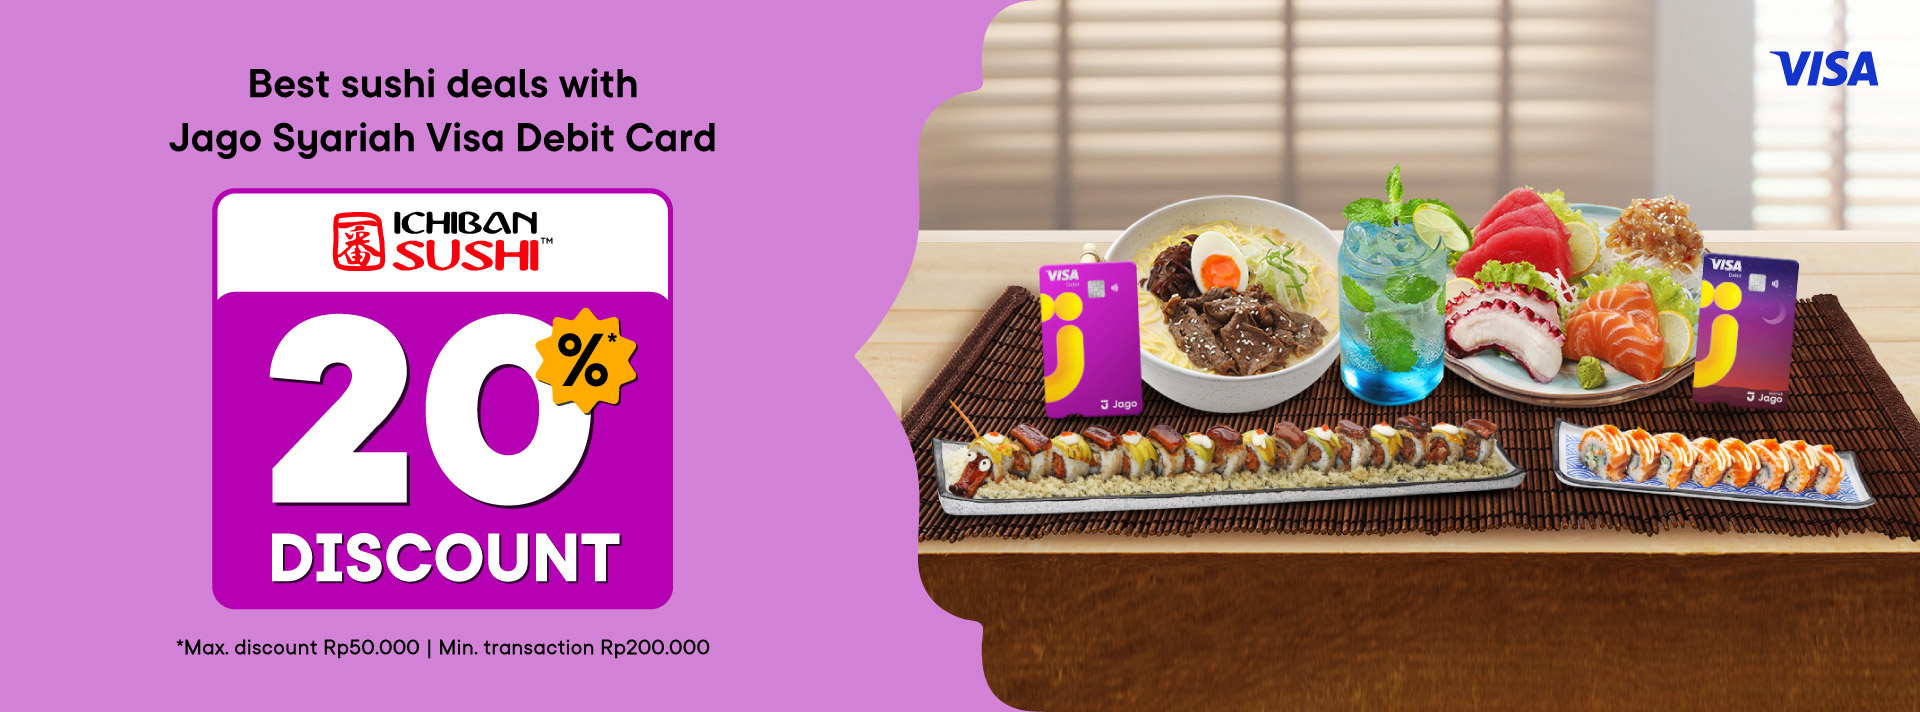 20% discount for sushi treats with Jago Visa Debit Card